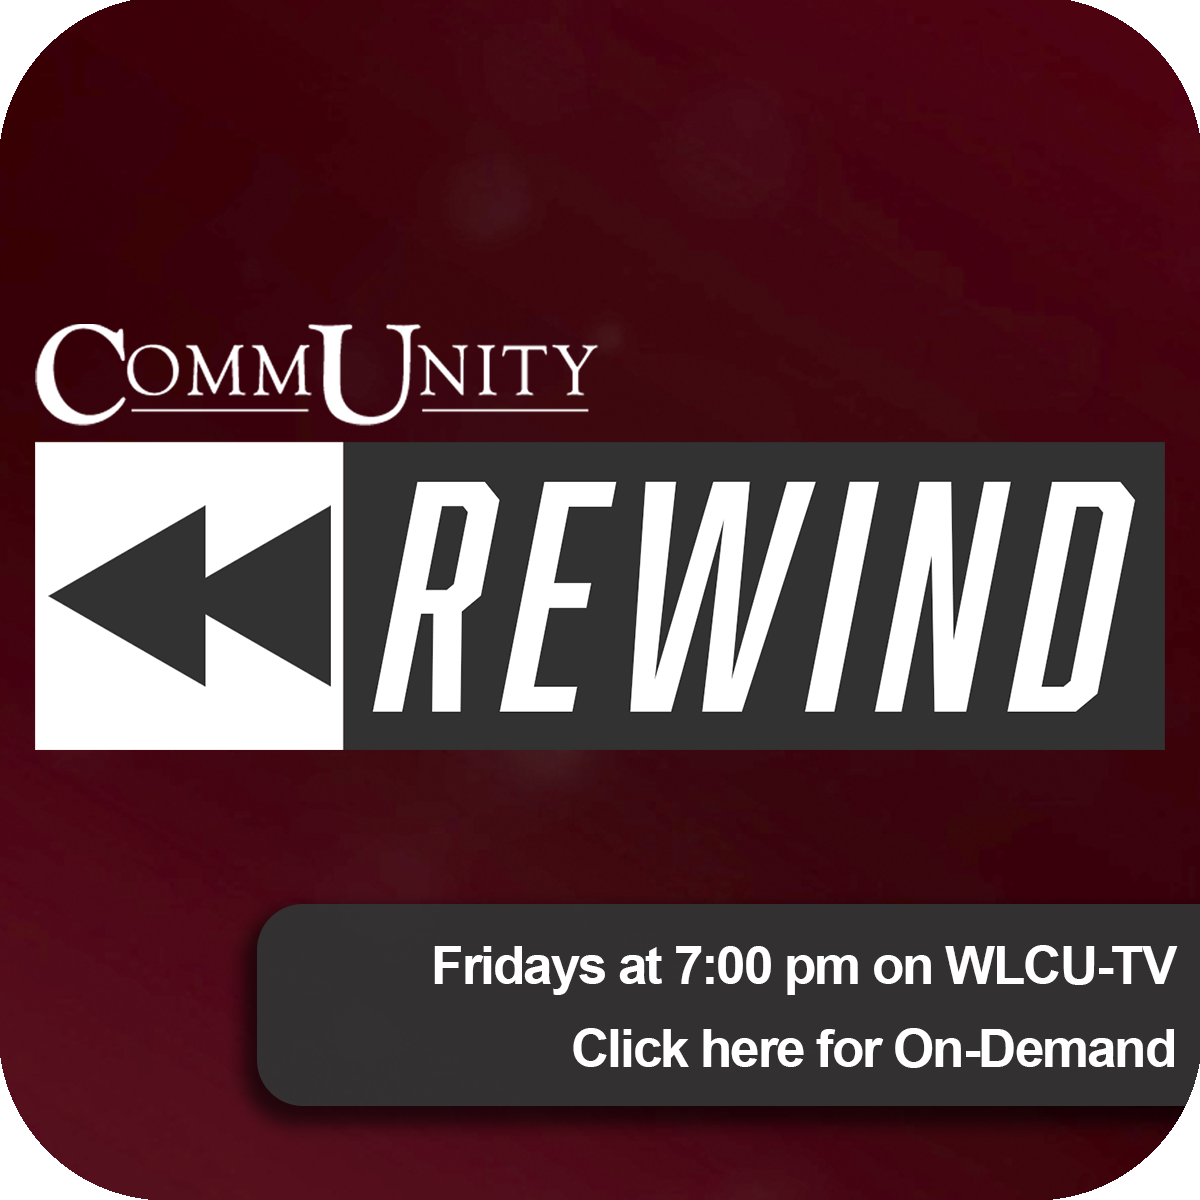 Community Rewind on Fridays at 7:00 PM on WLCU-TV